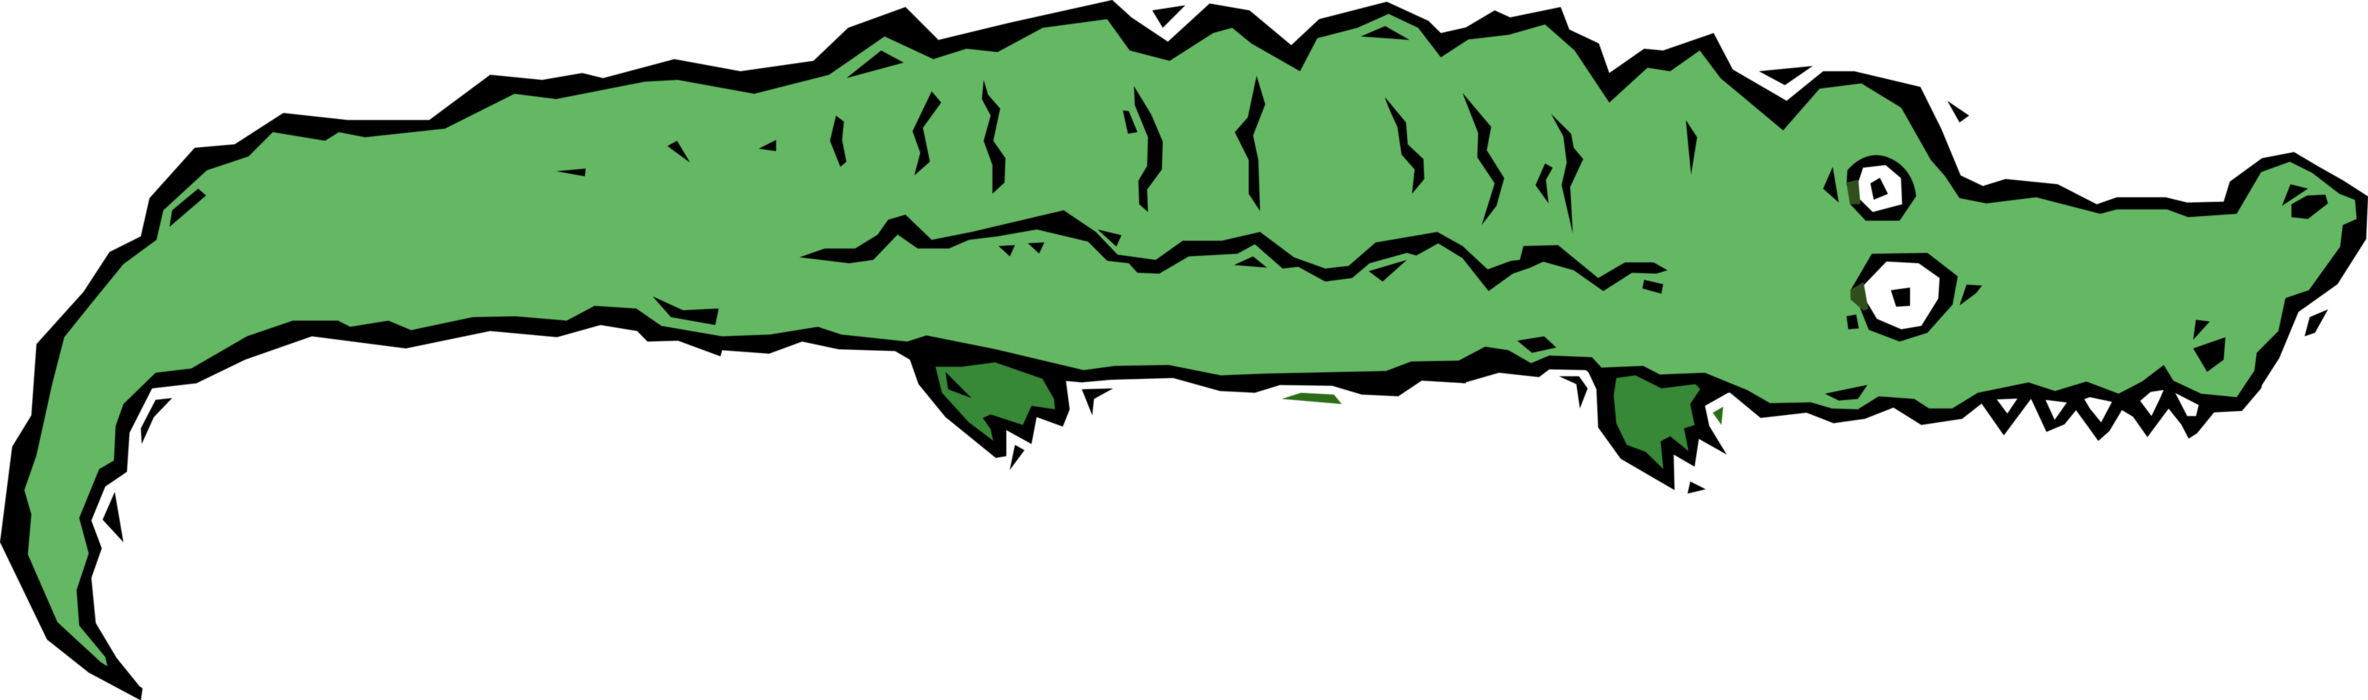 Vector Illustration of Alligator or Crocodile Tropical Aquatic Reptile 